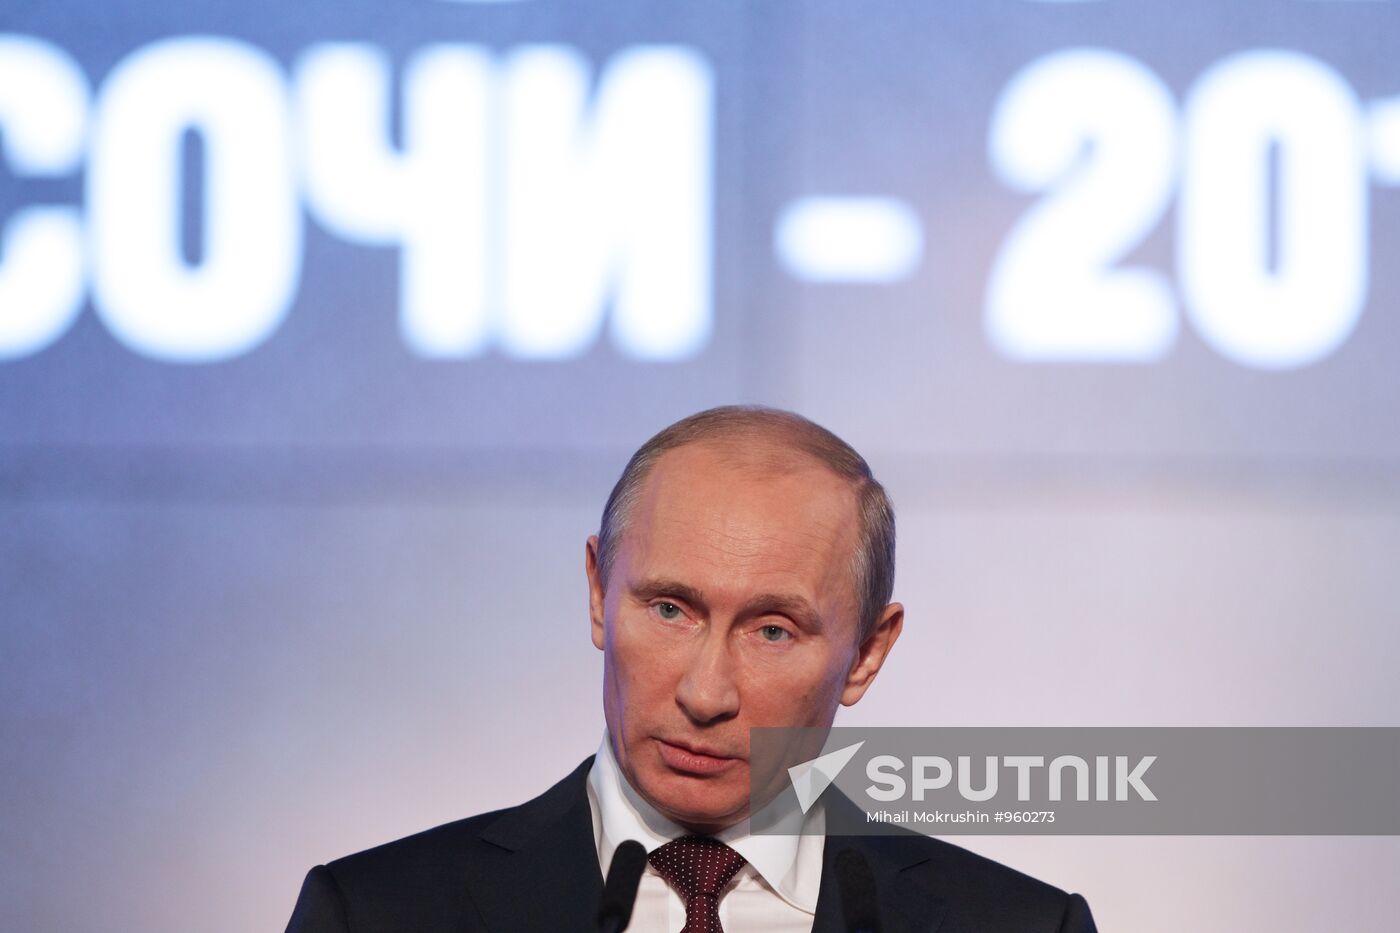 Vladimir Putin attends investment forum "Sochi 2011".